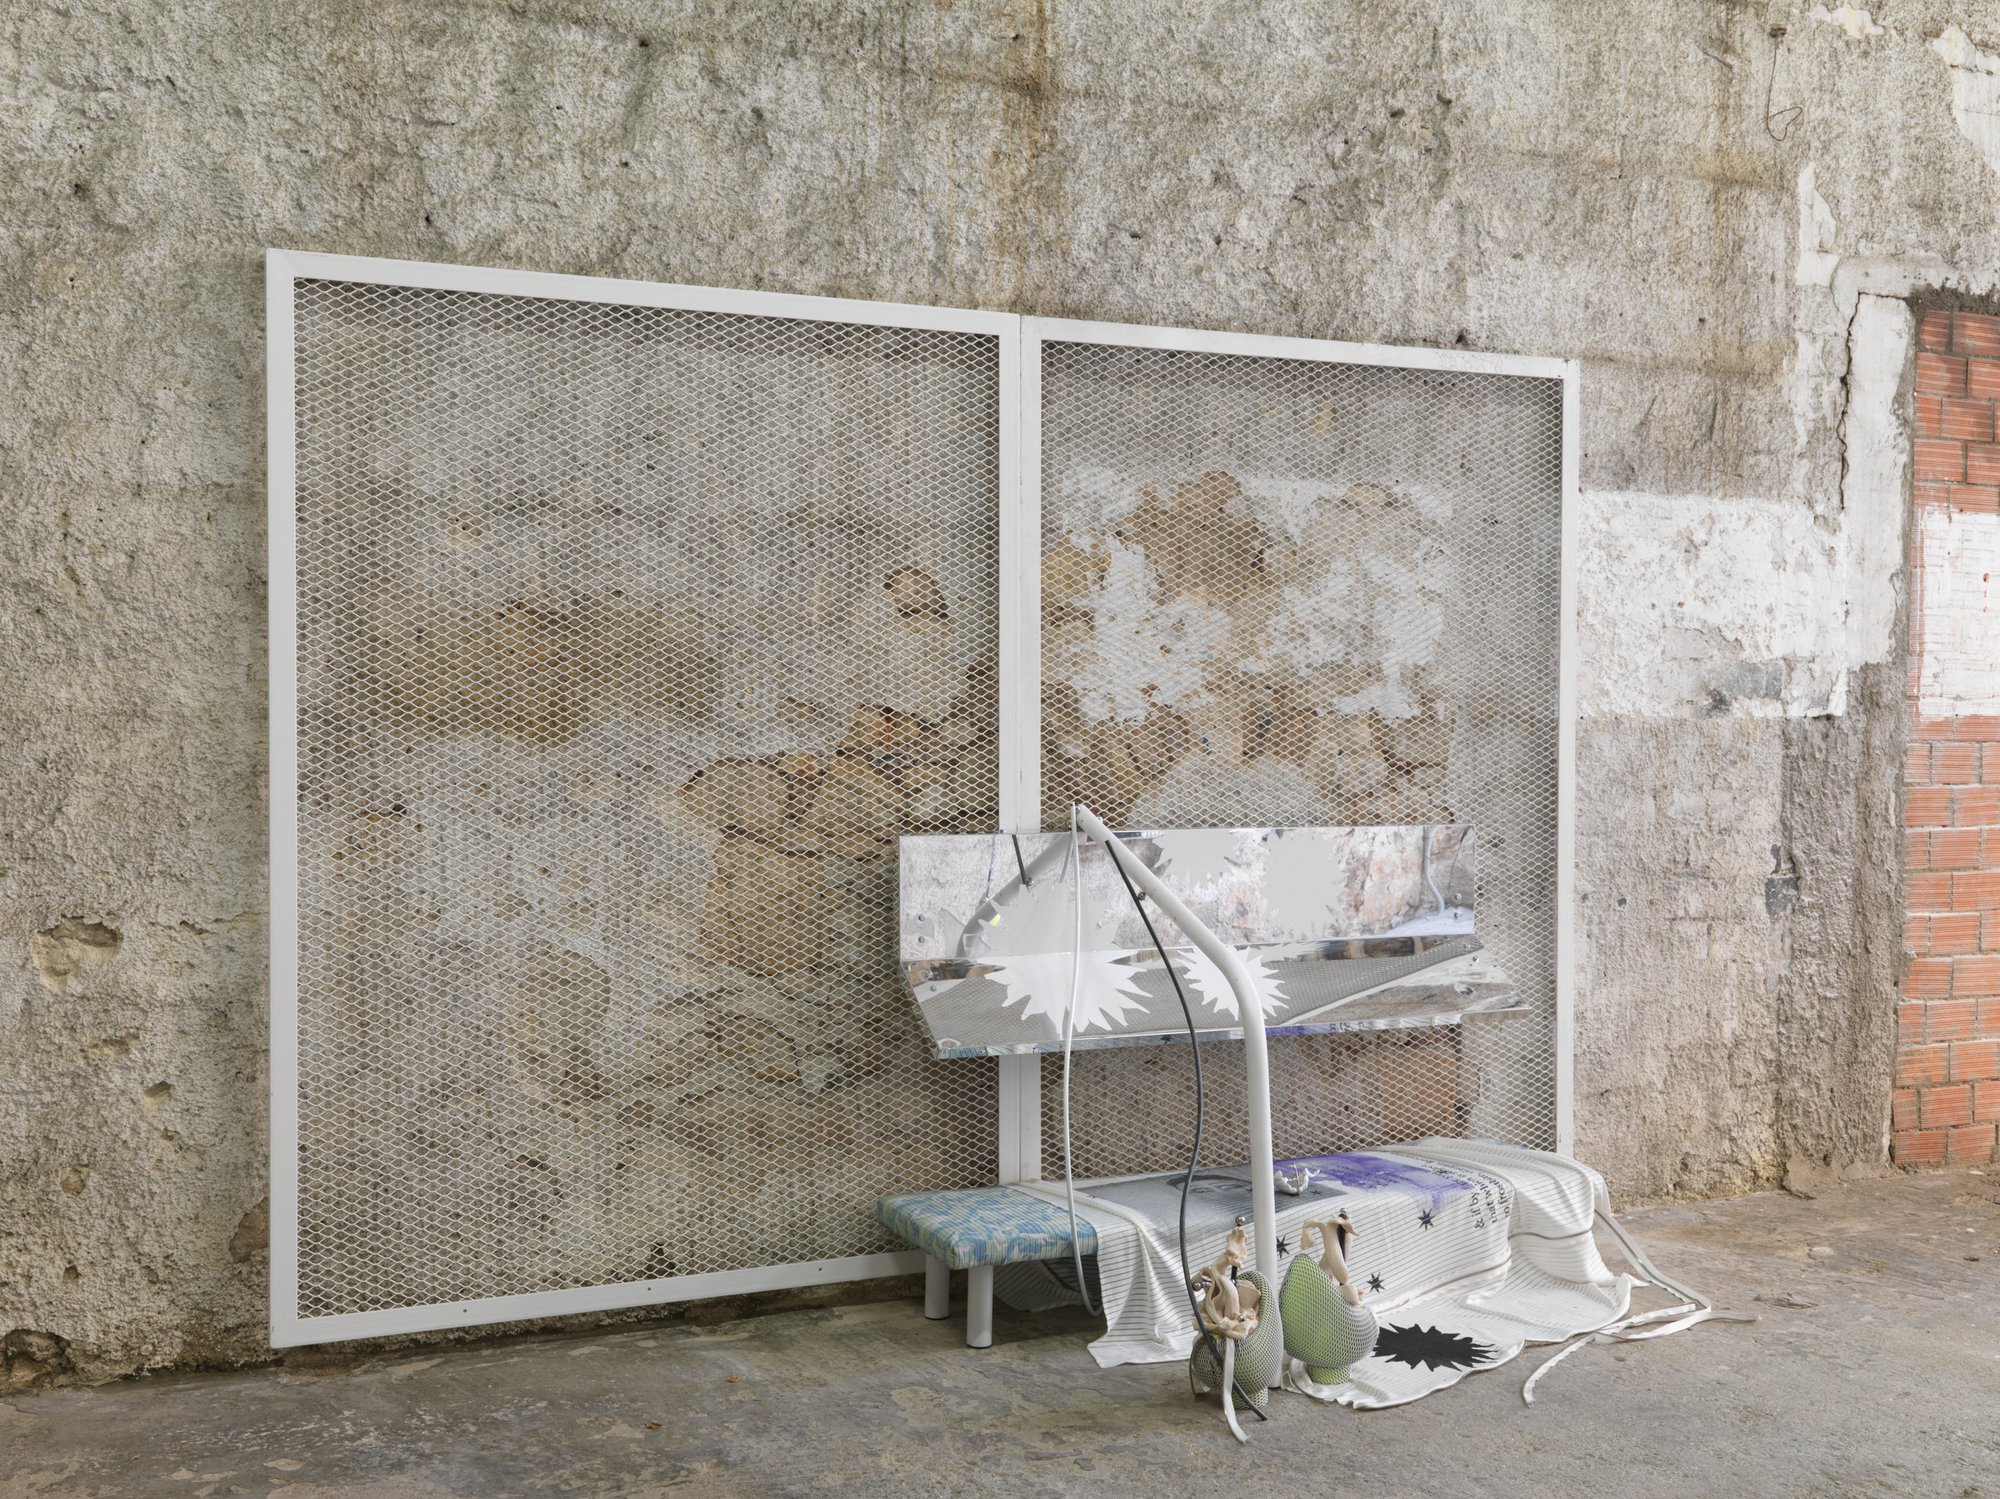 Installation view, David Douard, O&#x27; thee lil&#x27;, Rodeo, Piraeus, 2021